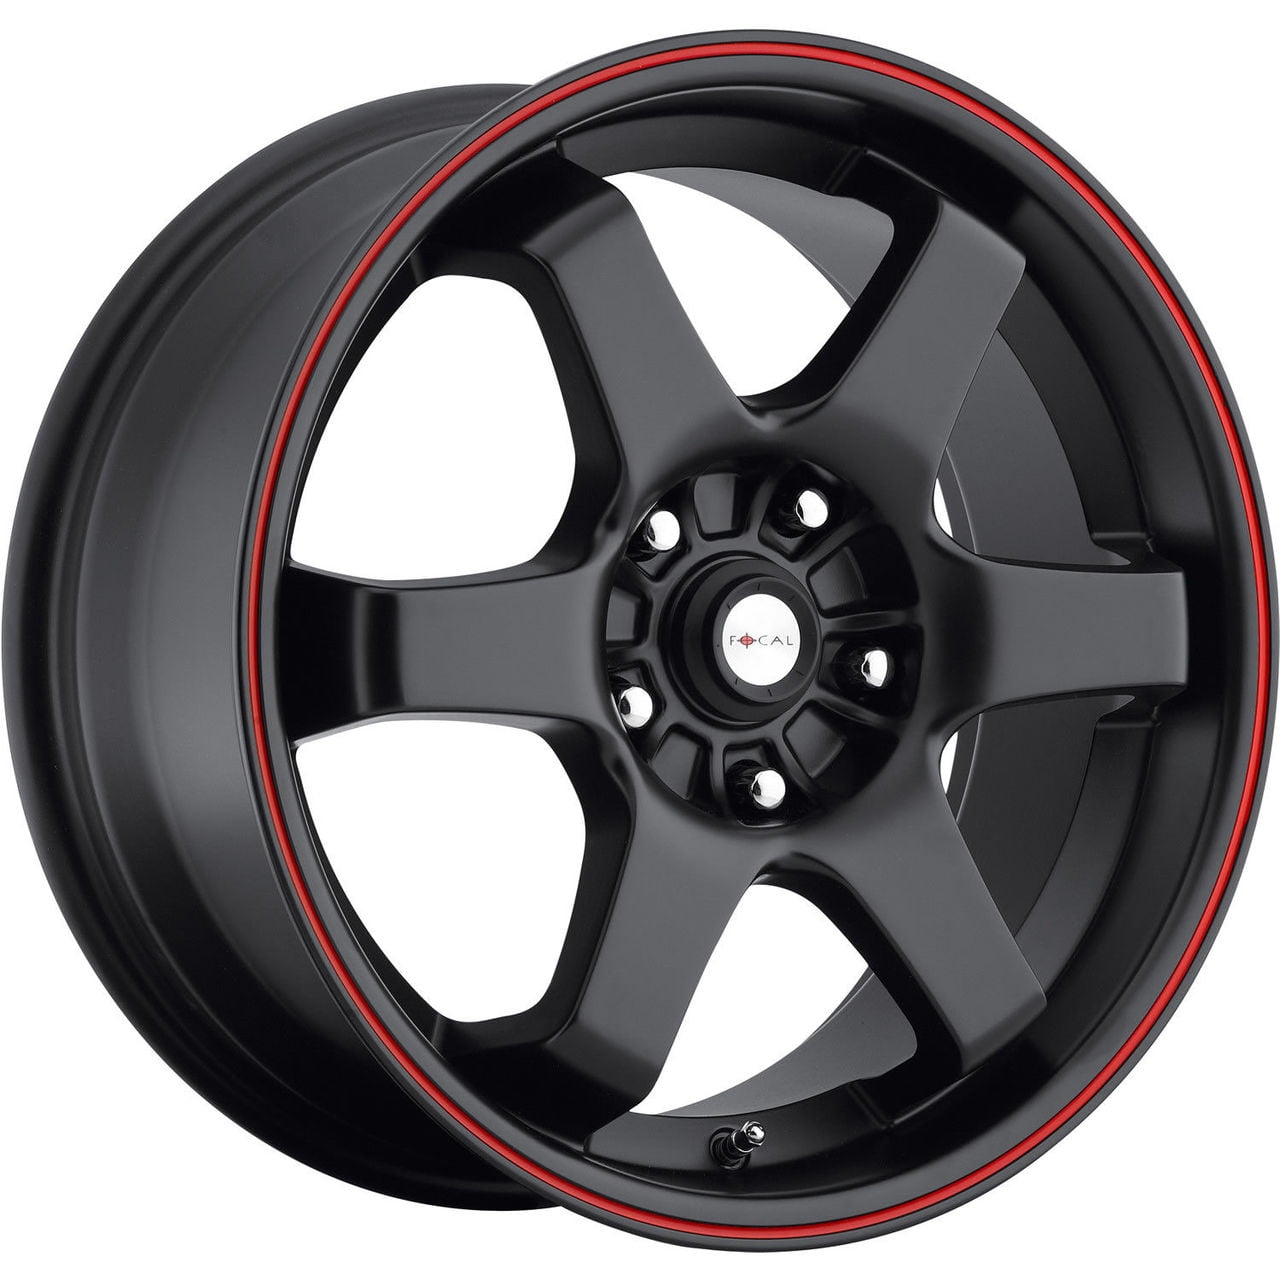 Focal 421R X Wheel Rim 15x6.5 5x100 & 5x4.5 Black w/ Red Stripe - Walmart.com